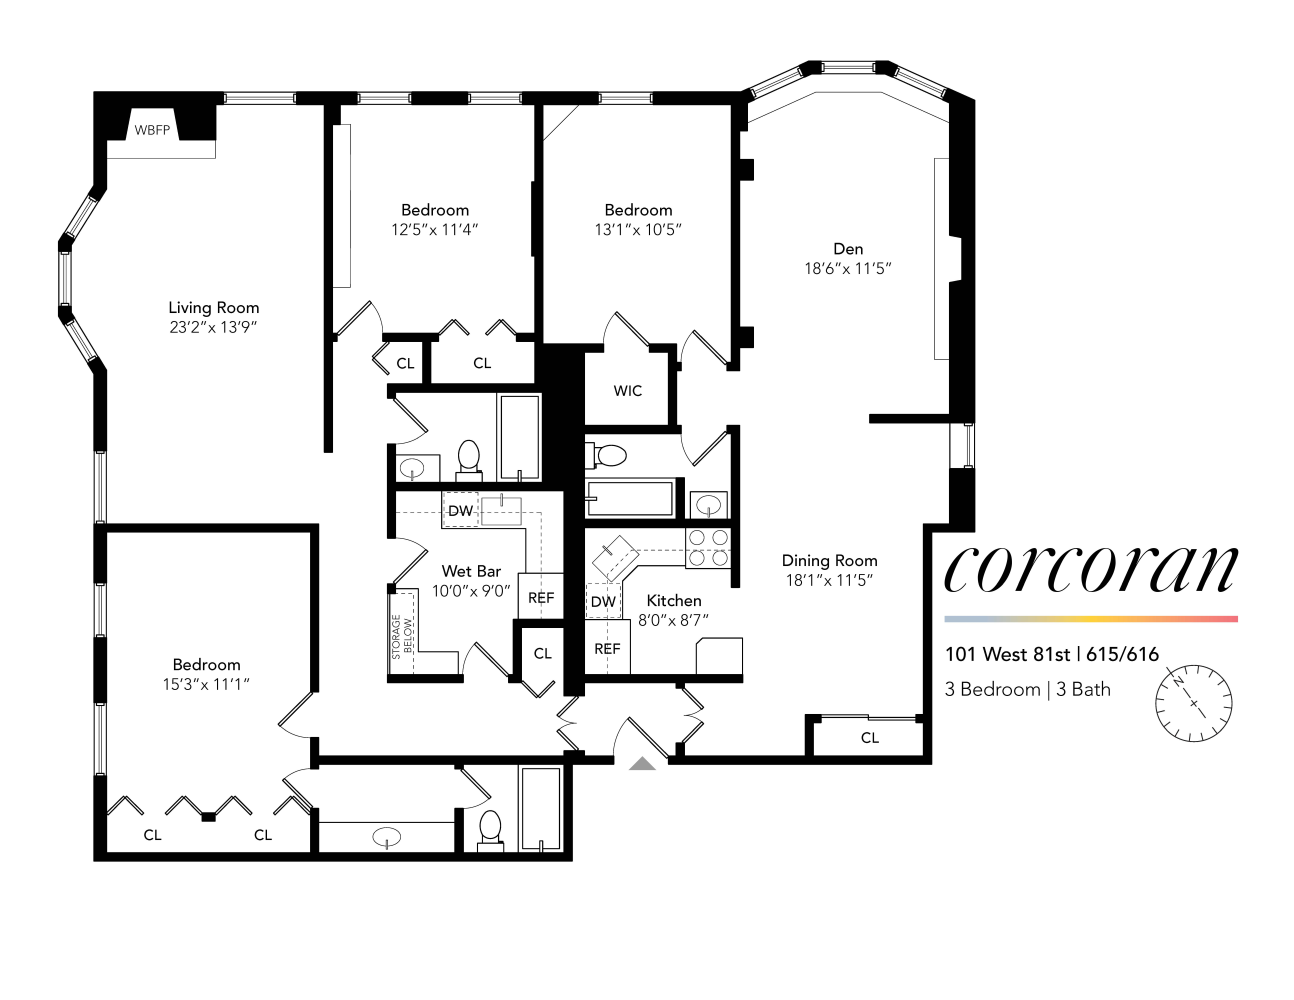 Floorplan for 101 West 81st Street, 615/616